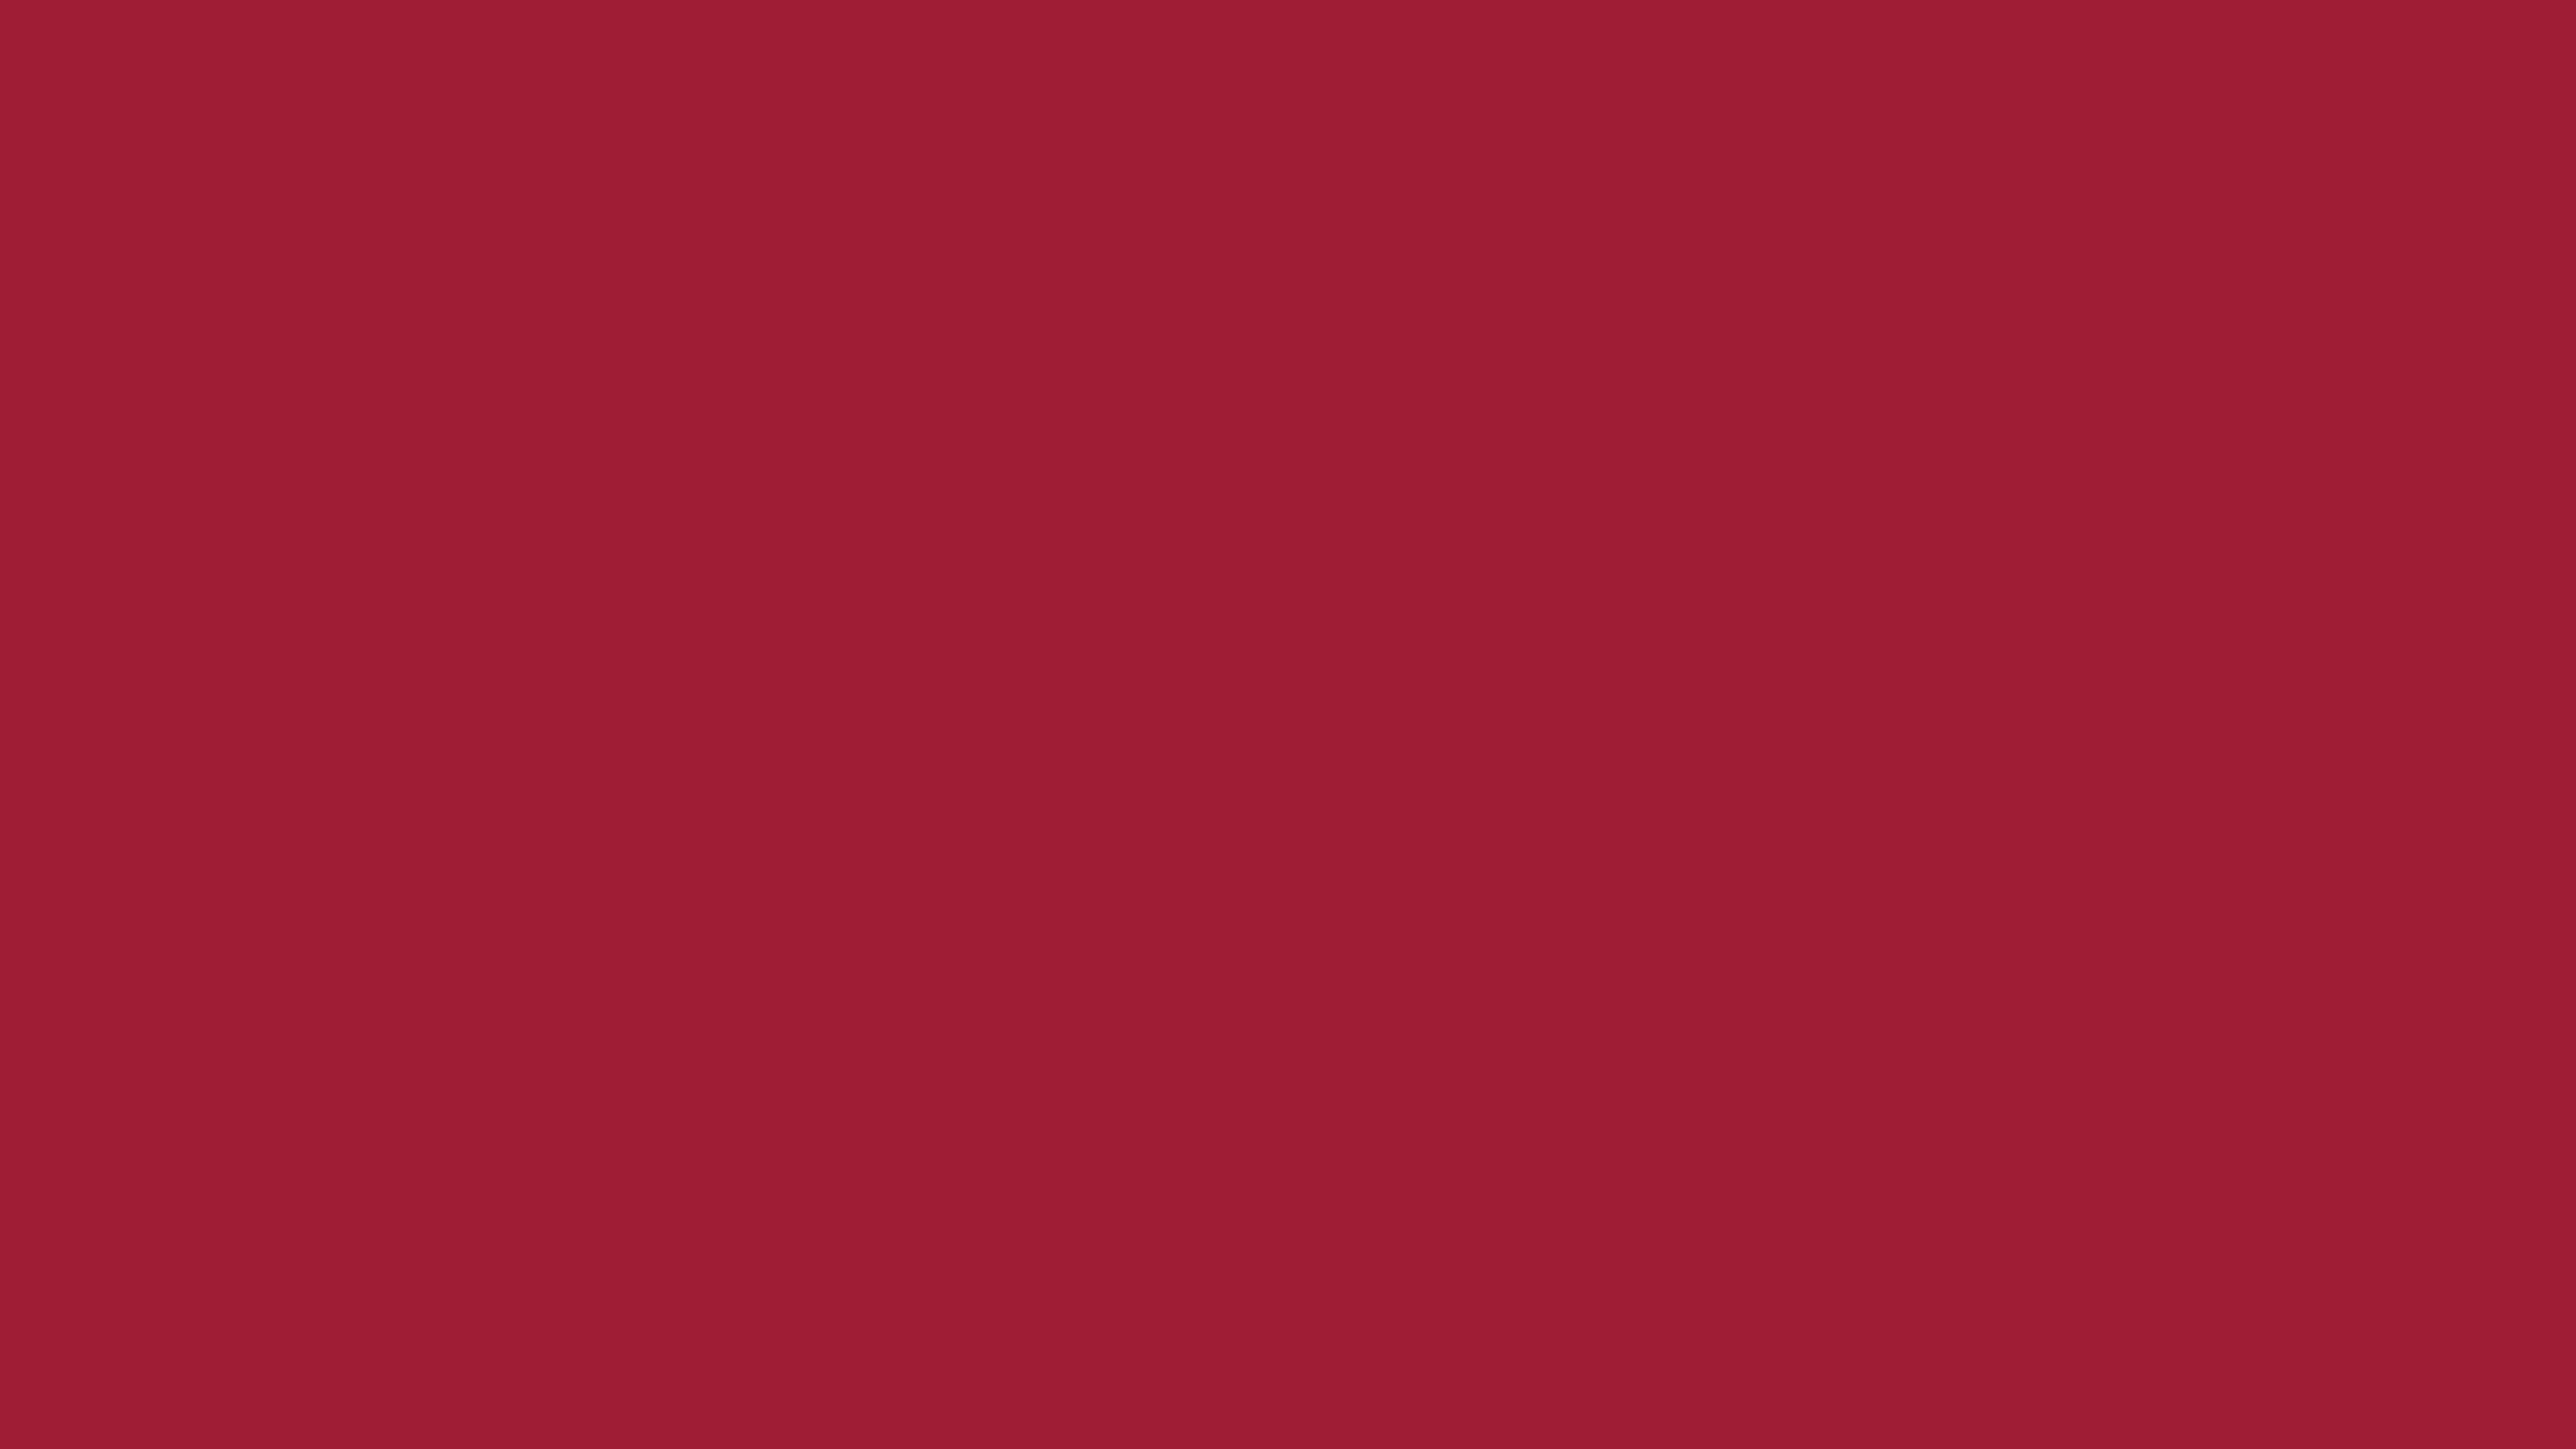 7680x4320 Vivid Burgundy Solid Color Background